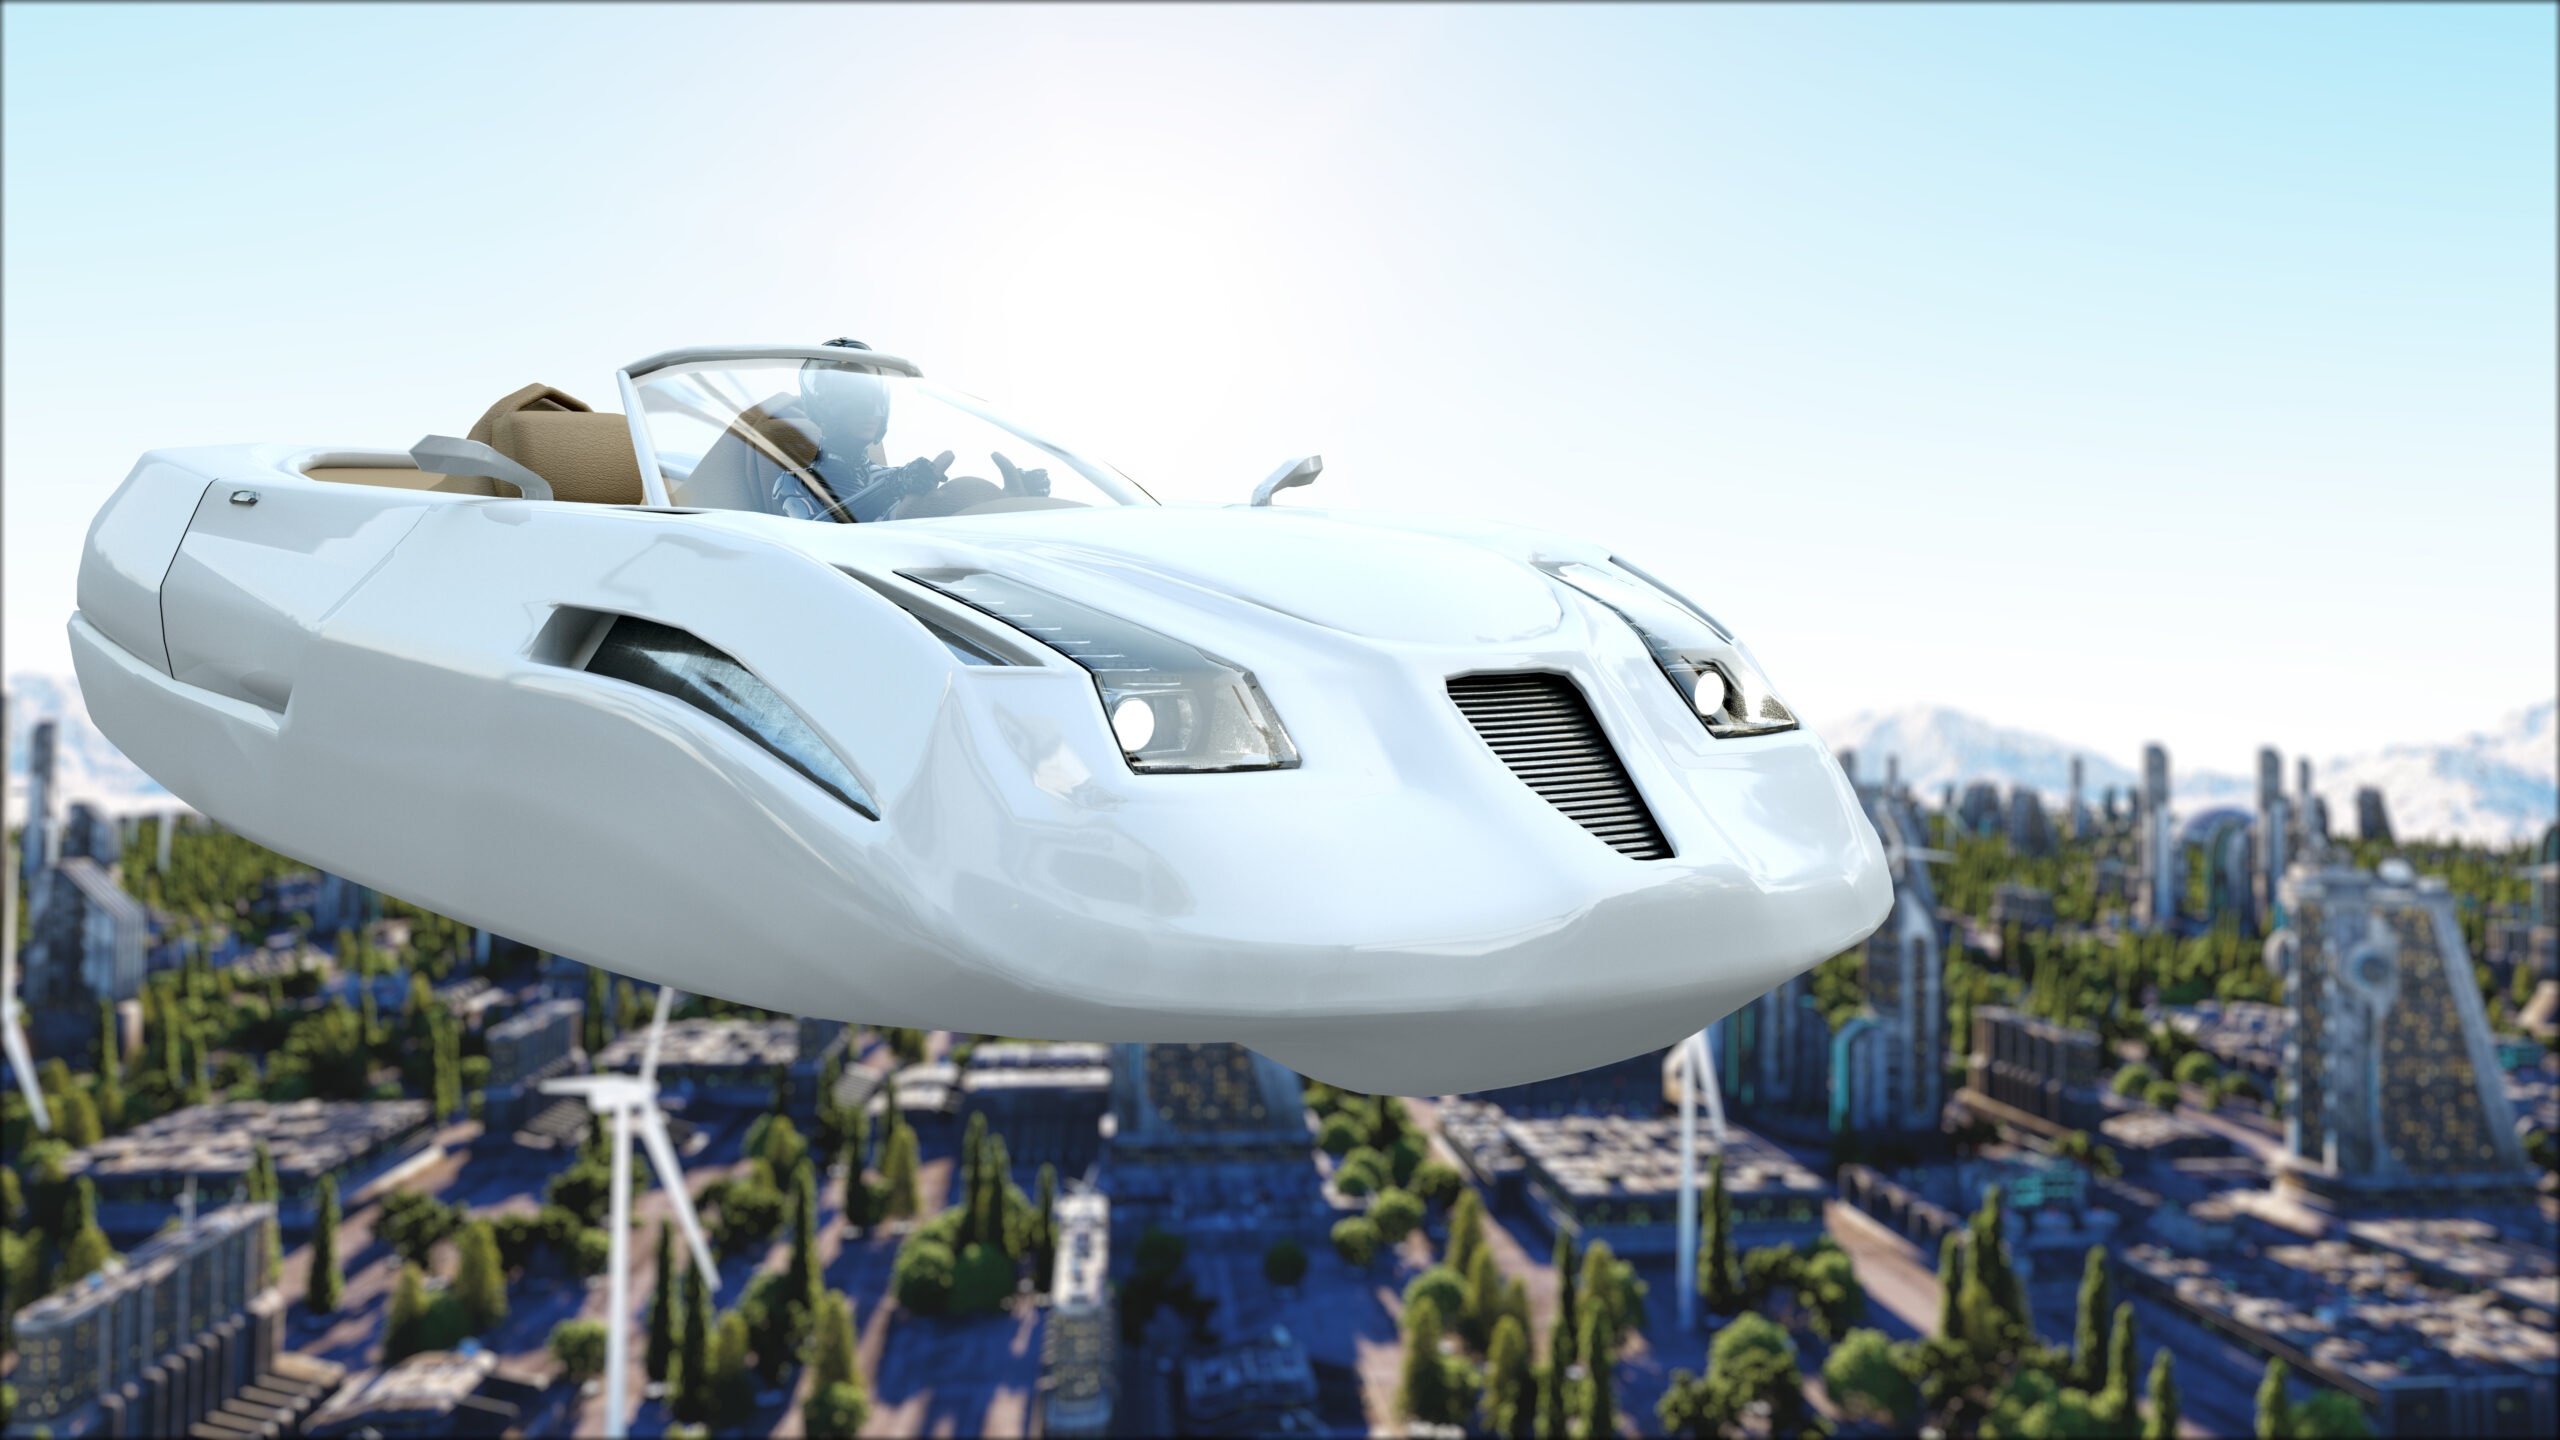 Включи машины летают. Летающий автомобиль. Летающий автомобиль будущего. Футуристический летающий автомобиль. Летающие машины в будущем.